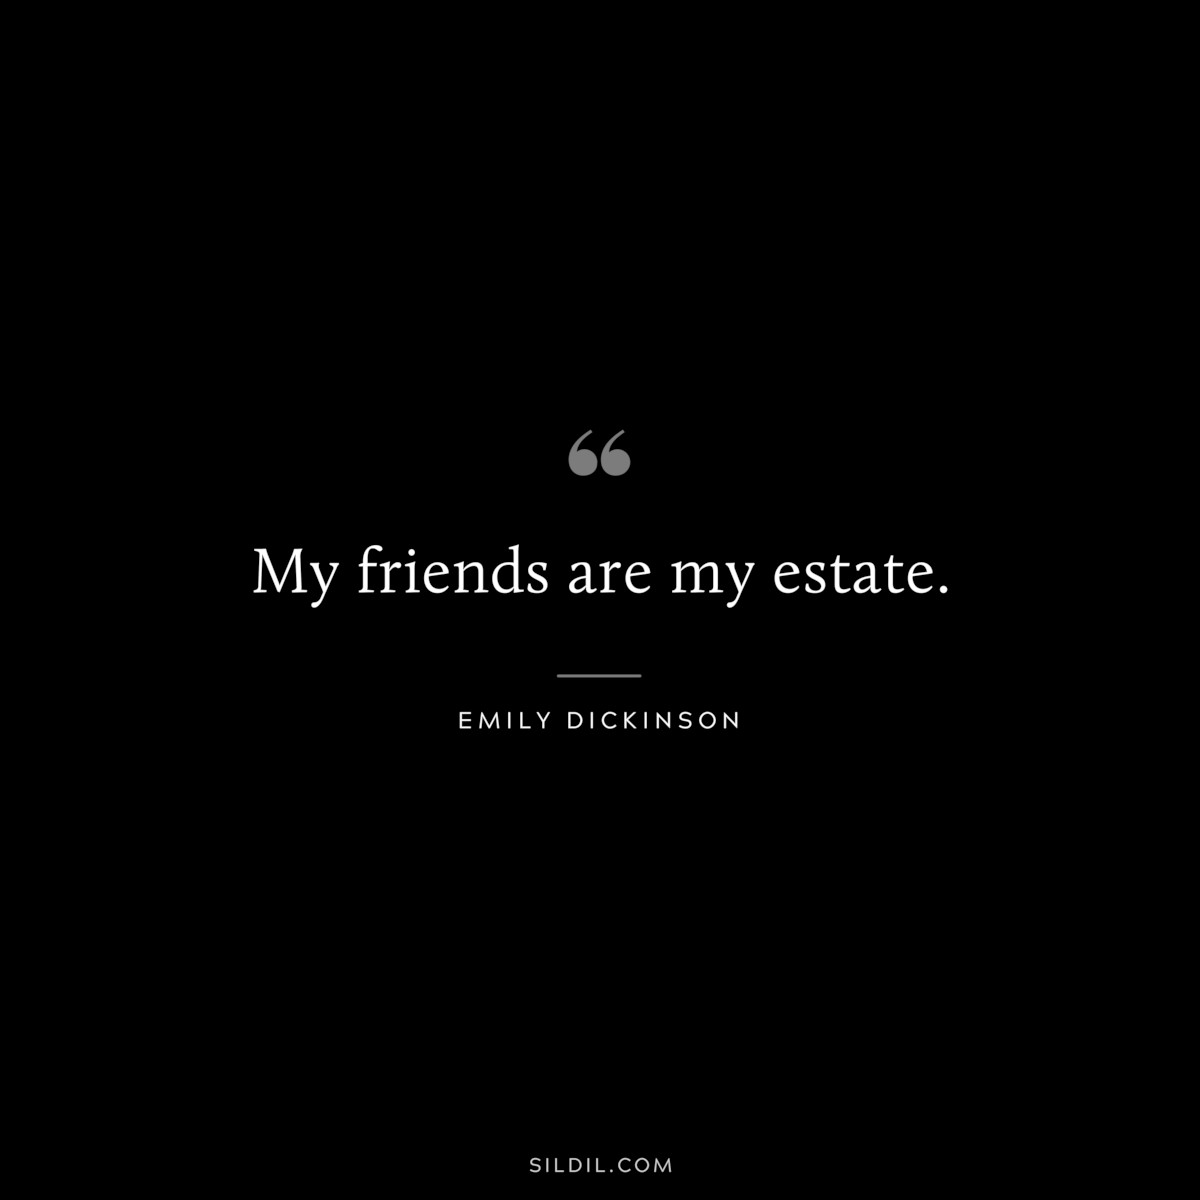 My friends are my estate.